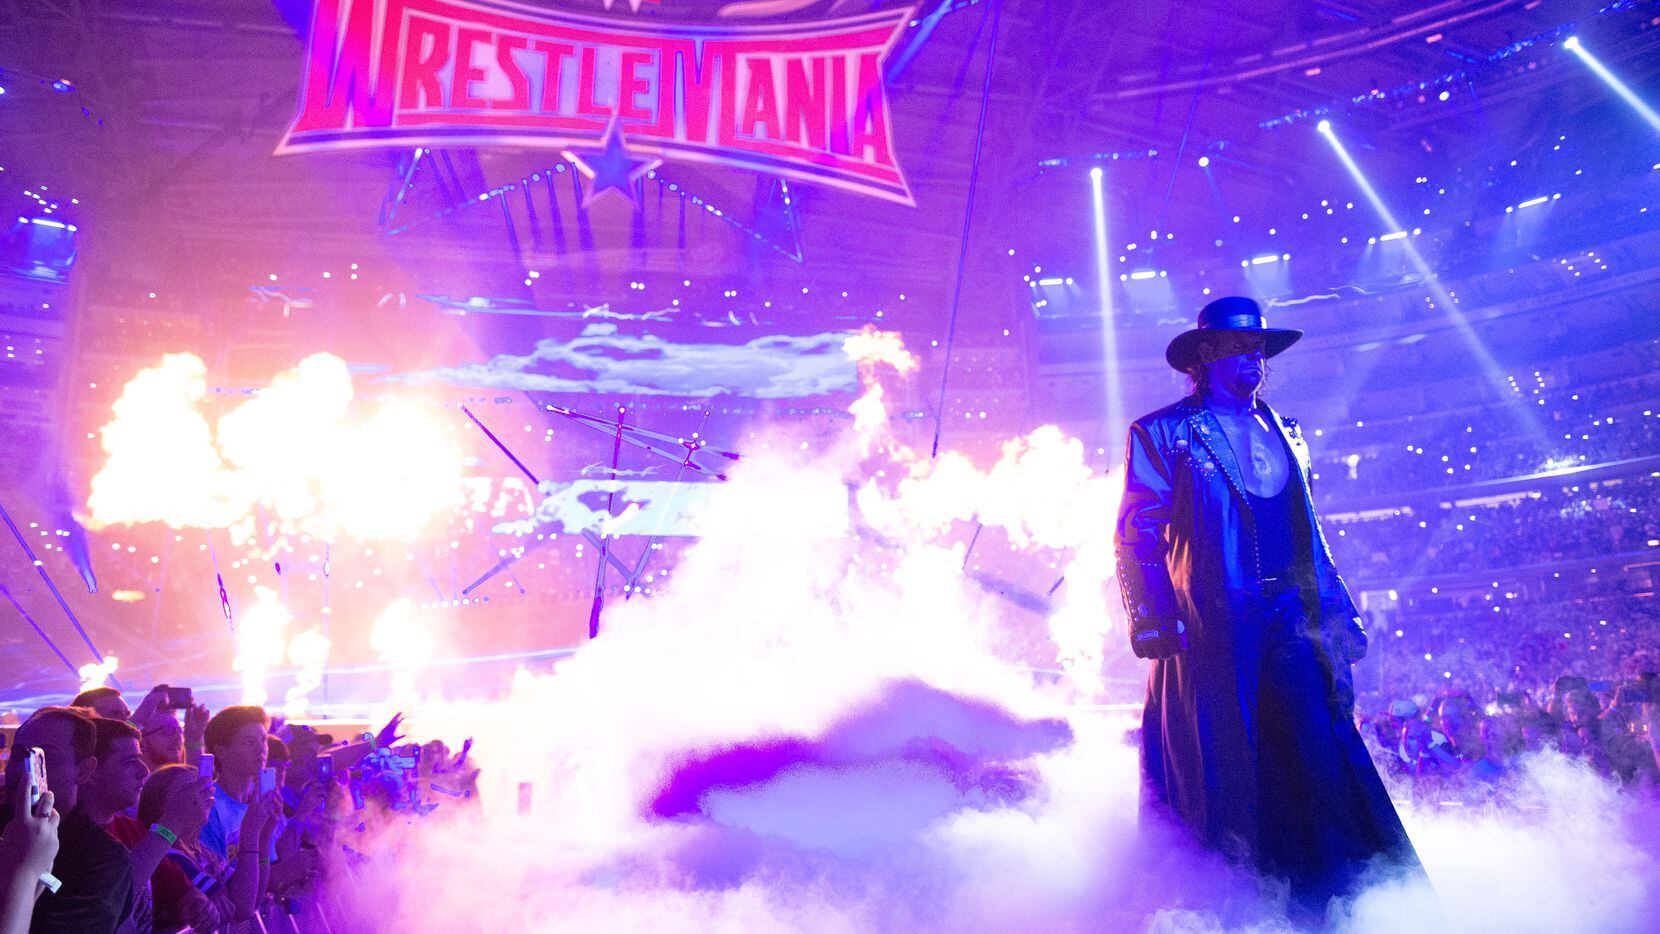 The Undertaker makes his entrance to face Shane McMahon at WrestleMania 32 at AT&T Stadium in Arlington, Texas.